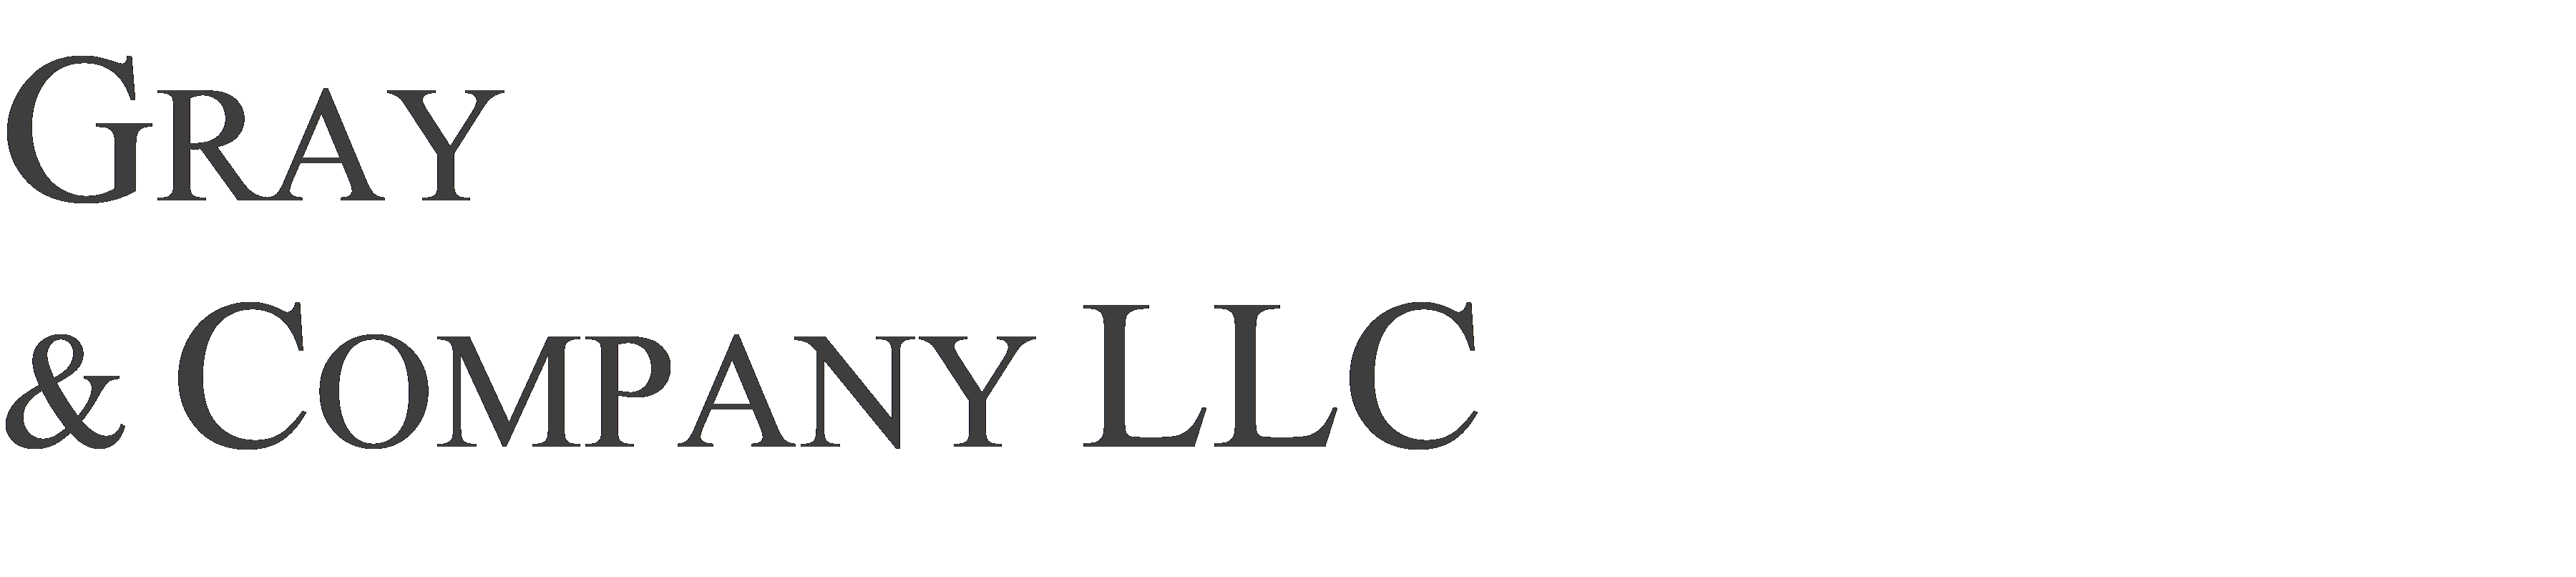 Gray & Company LLC